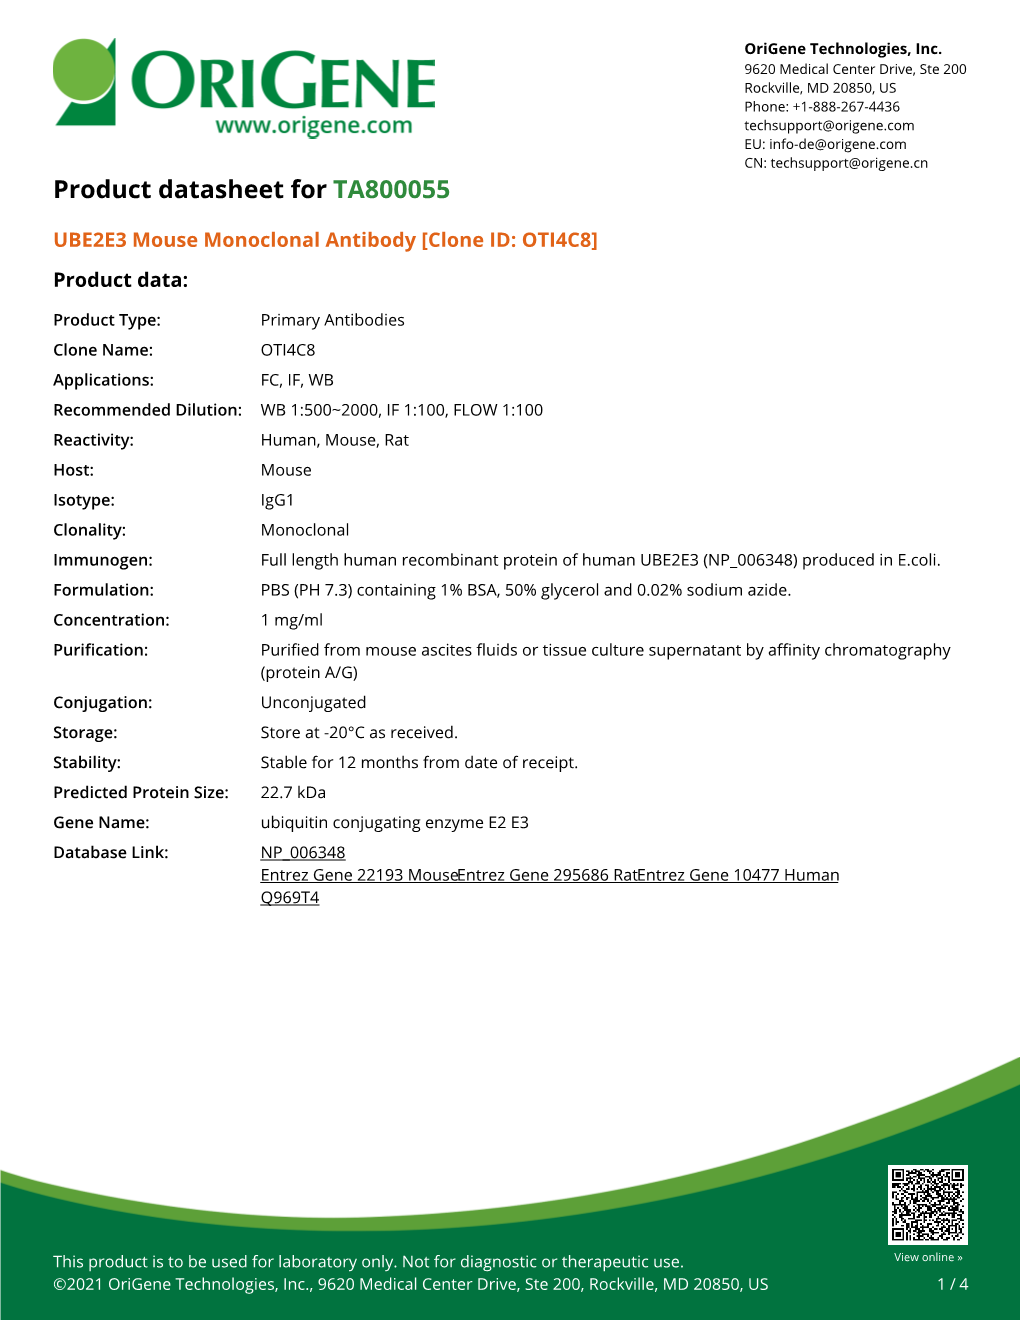 UBE2E3 Mouse Monoclonal Antibody [Clone ID: OTI4C8] Product Data